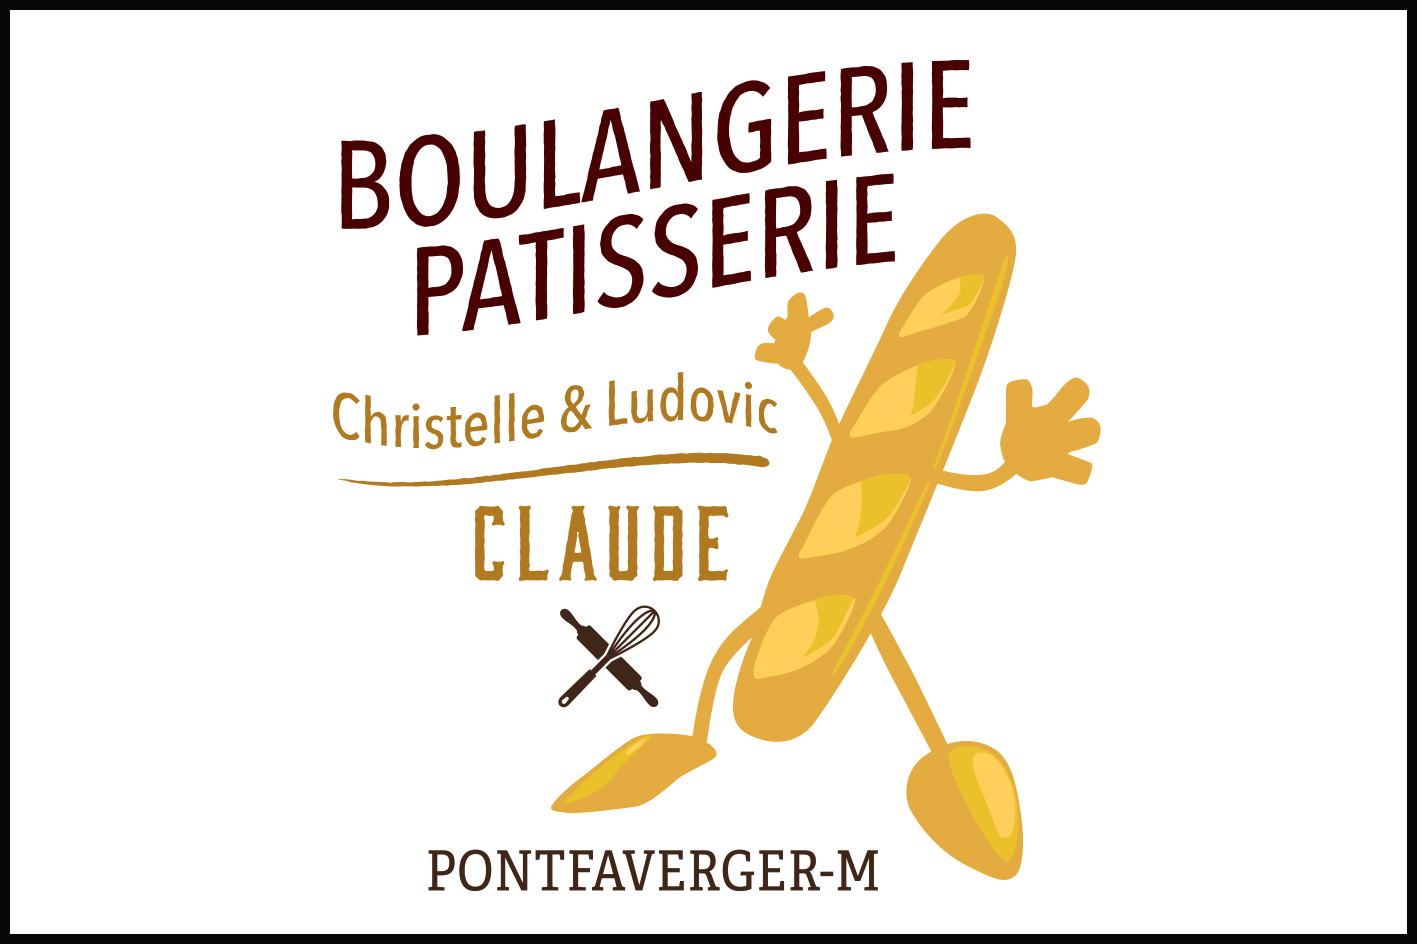 Boulangerie Christelle et Ludovic claude